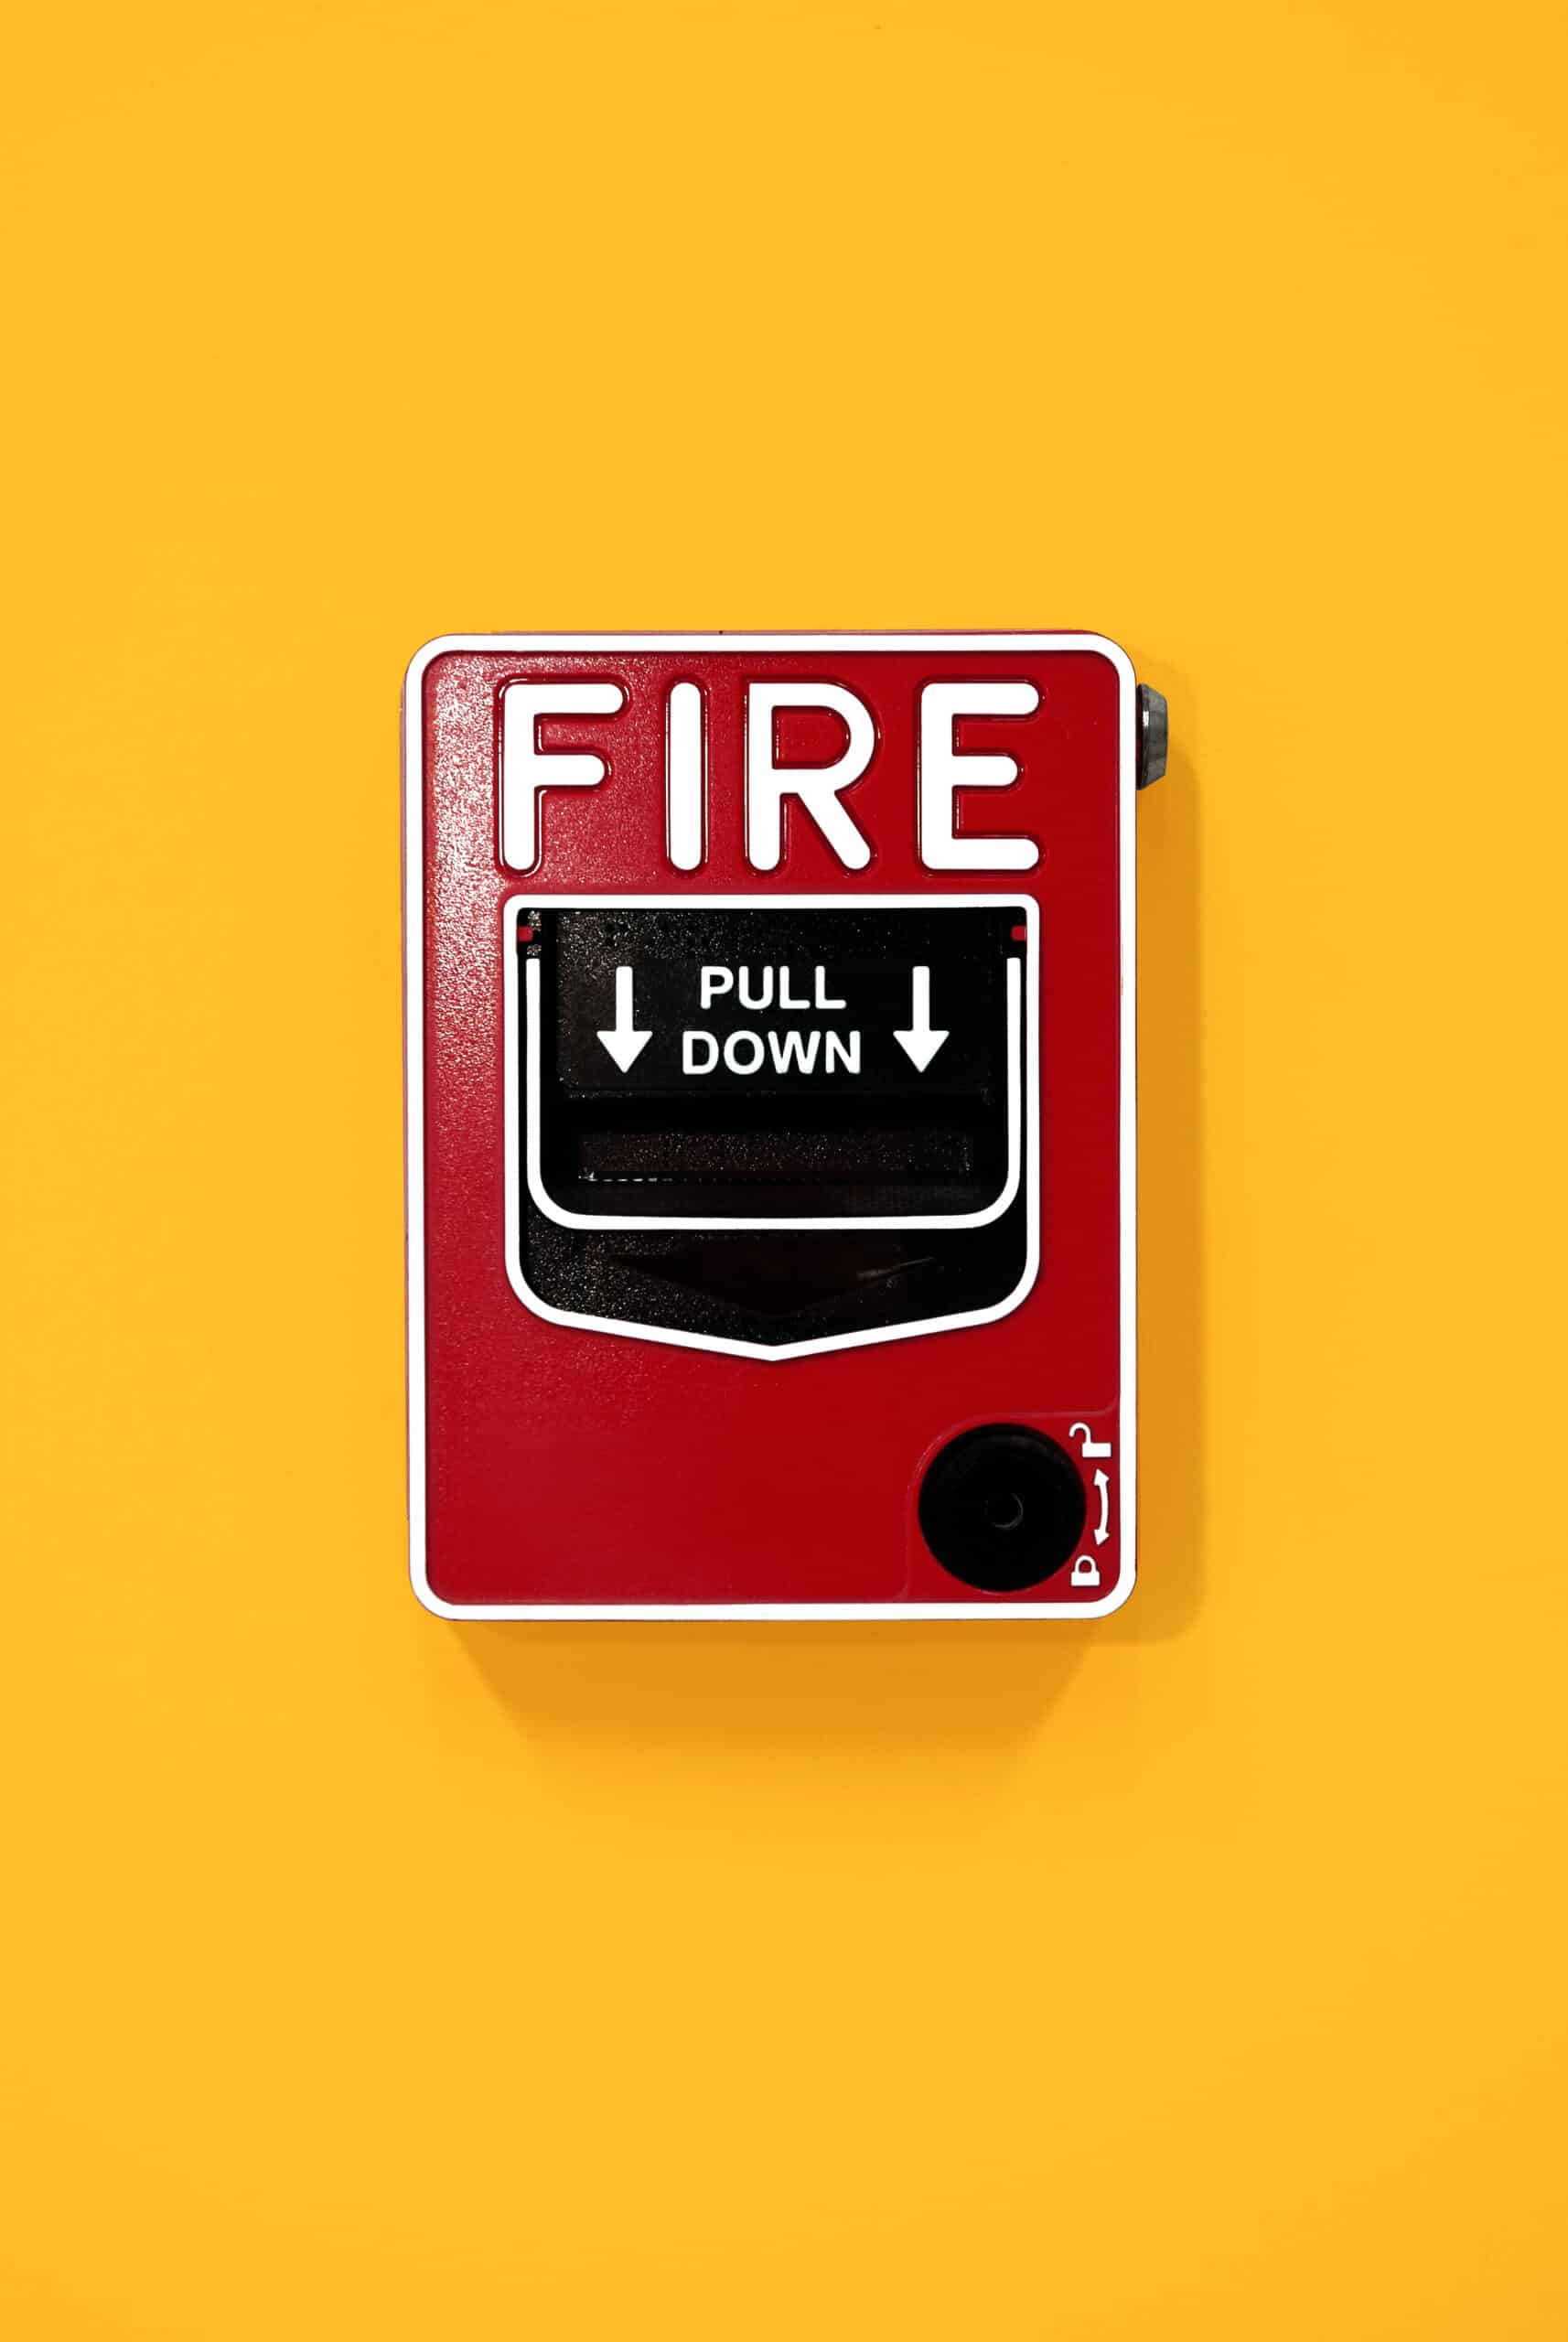 fire alarm on wall 2022 09 21 20 16 43 utc